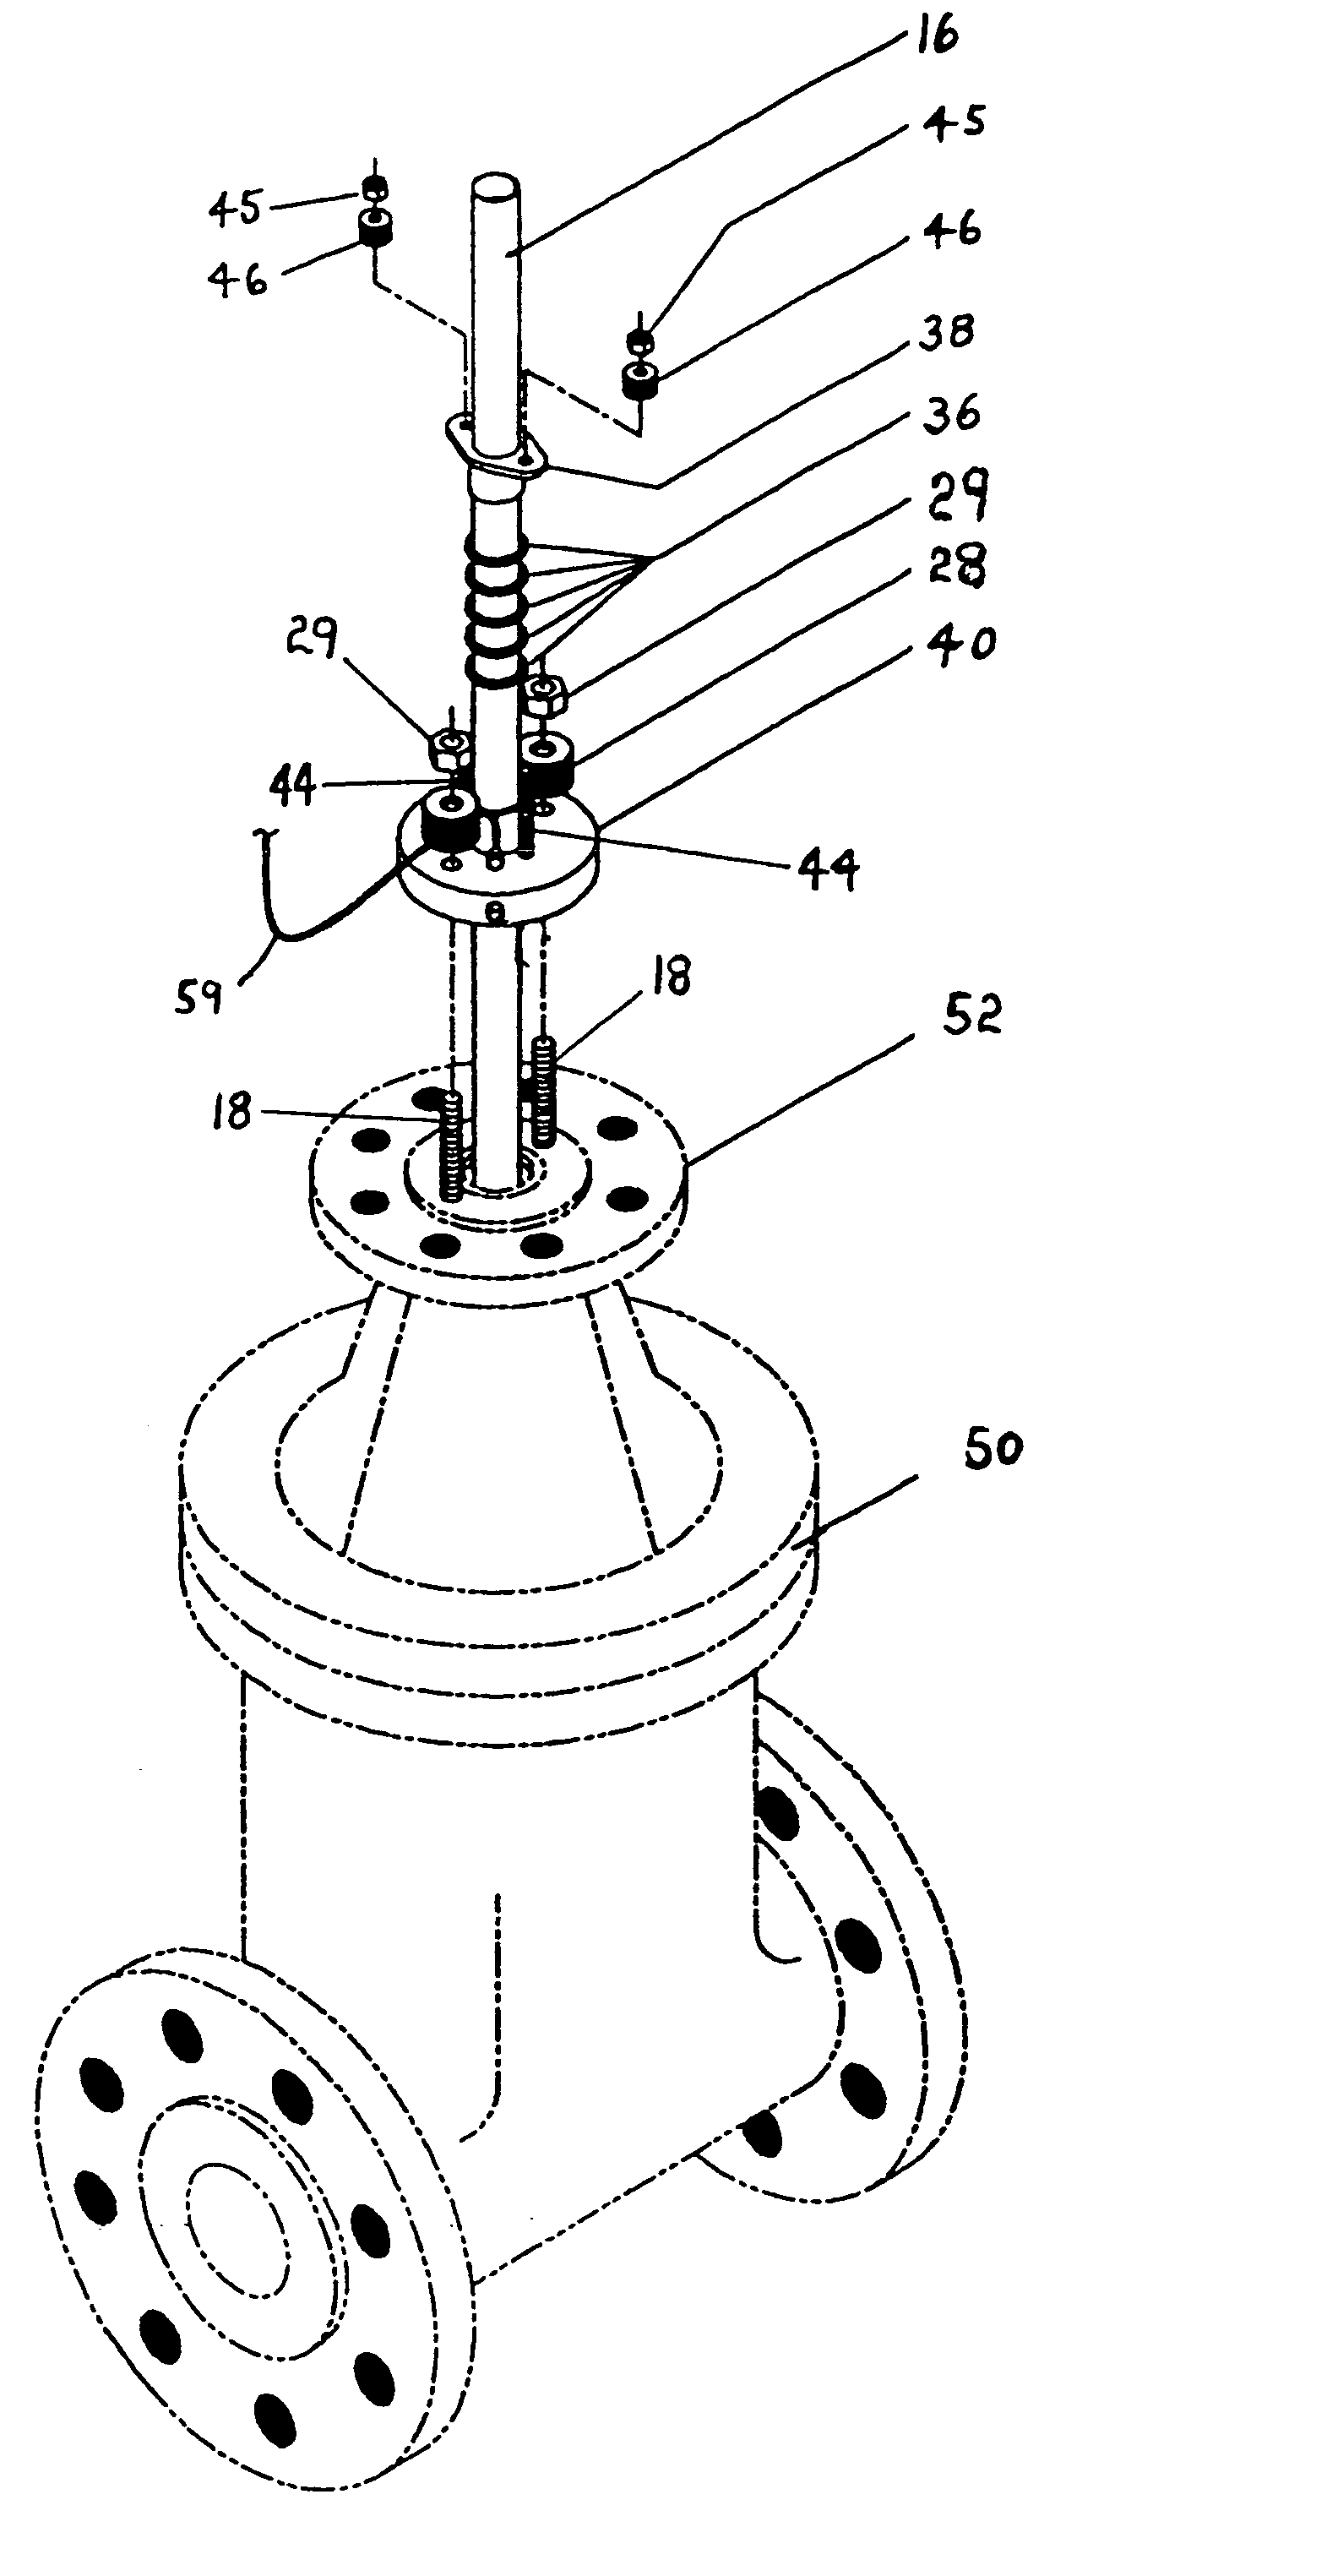 Low-leakage valve apparatus